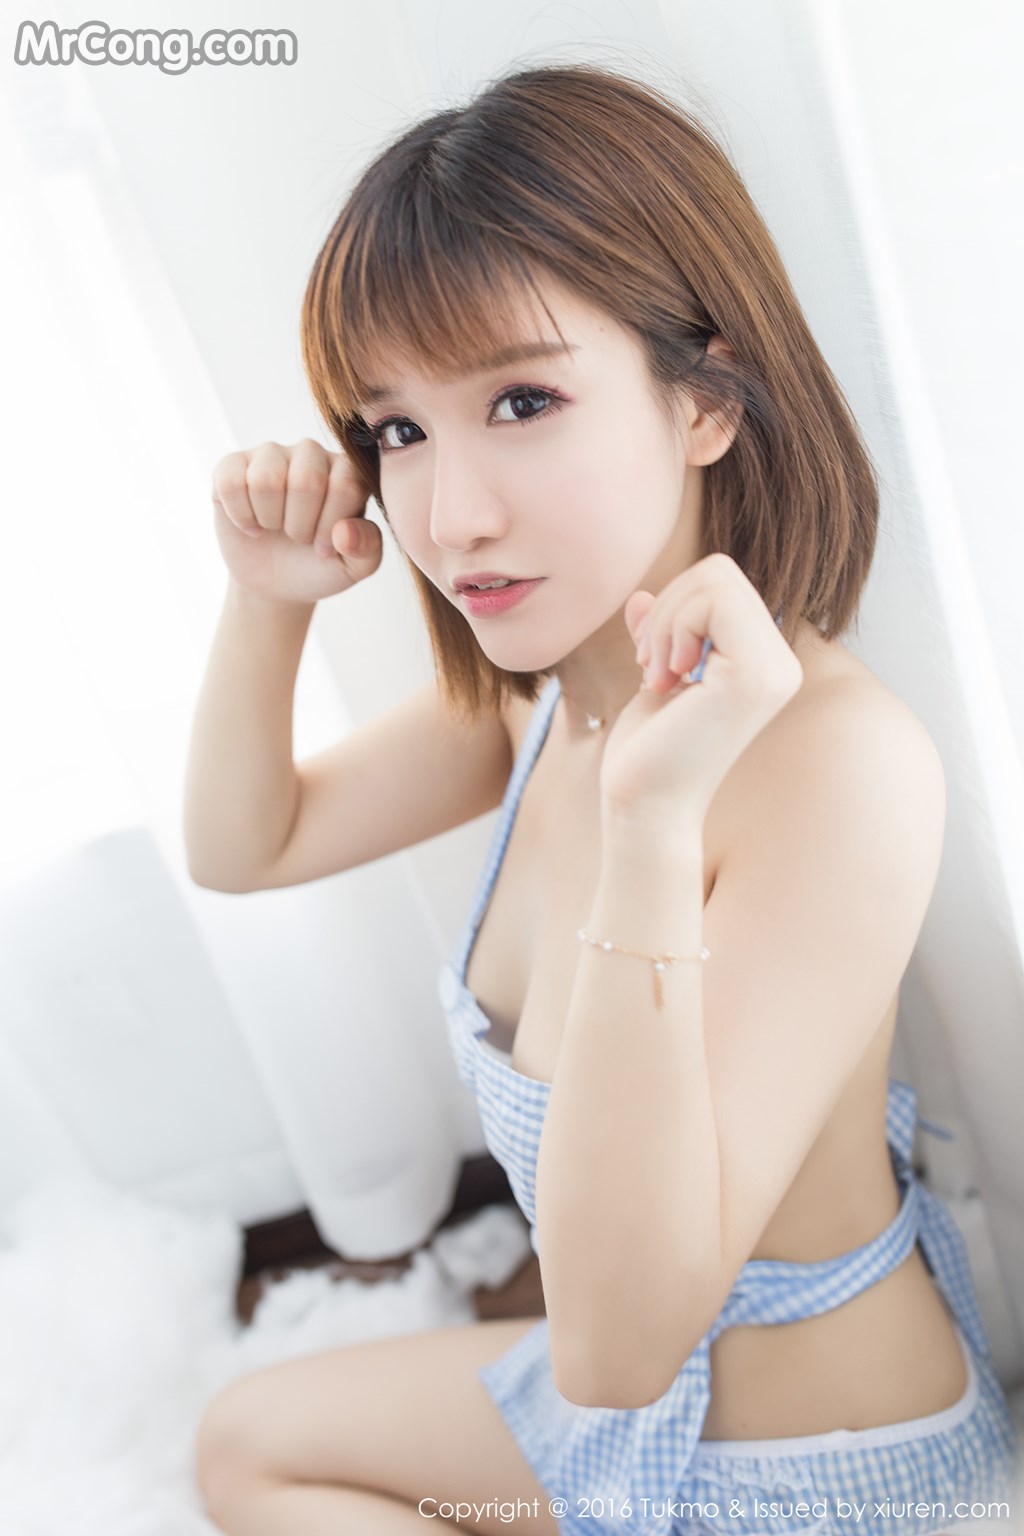 Tukmo Vol.092: Model Aojiao Meng Meng (K8 傲 娇 萌萌 Vivian) (41 photos) photo 2-0